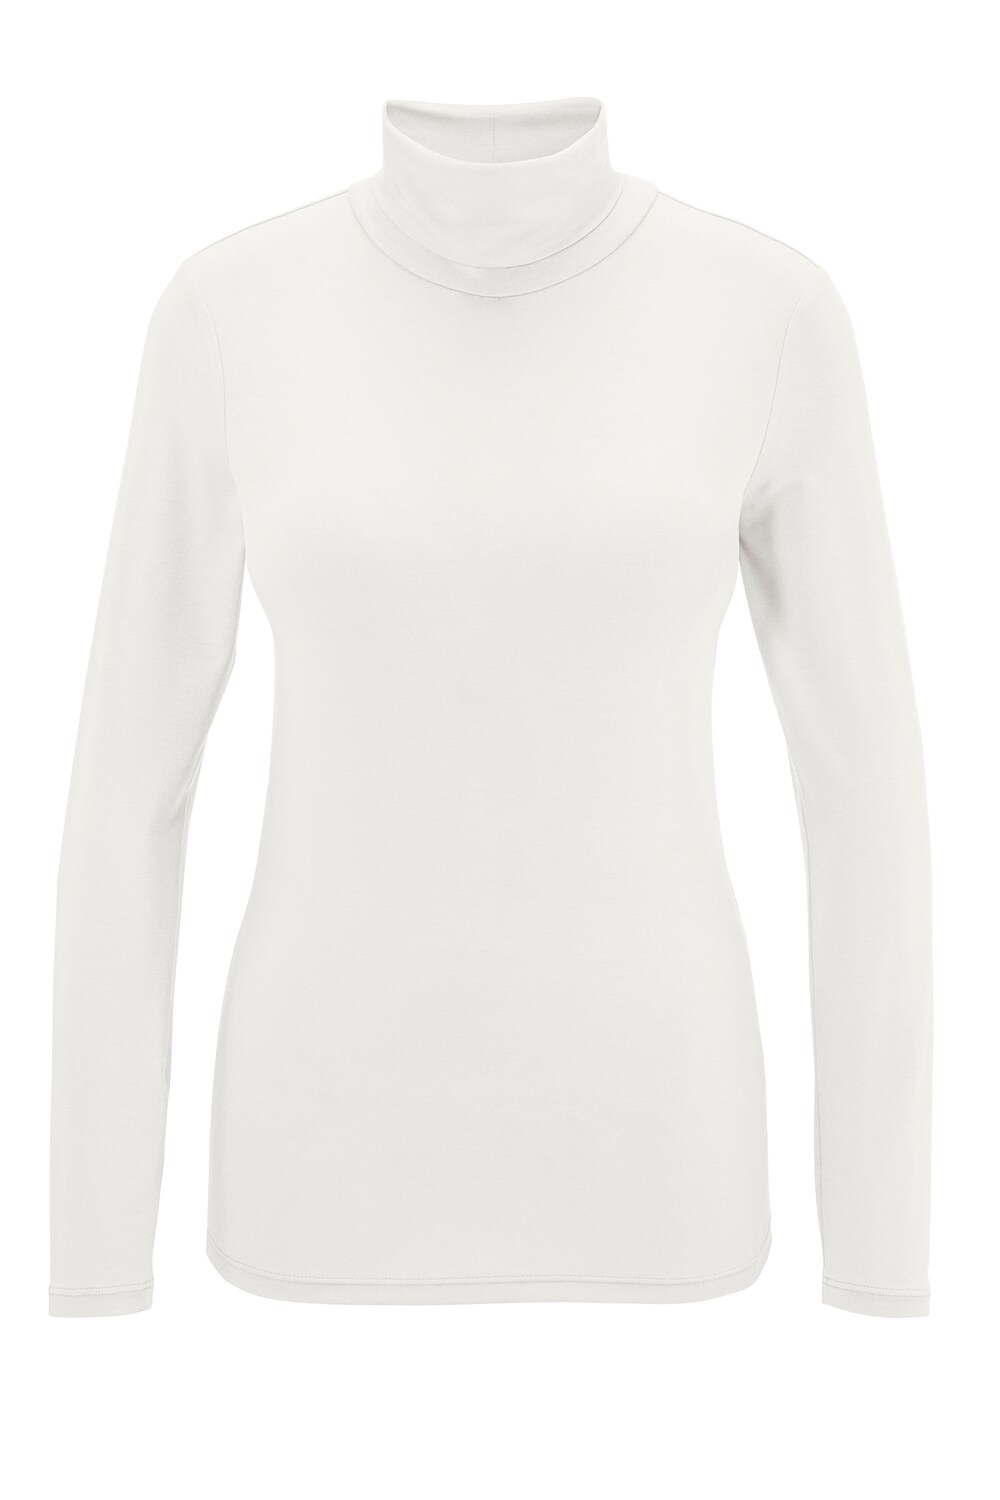 Рубашка Aniston CASUAL, шерсть белая